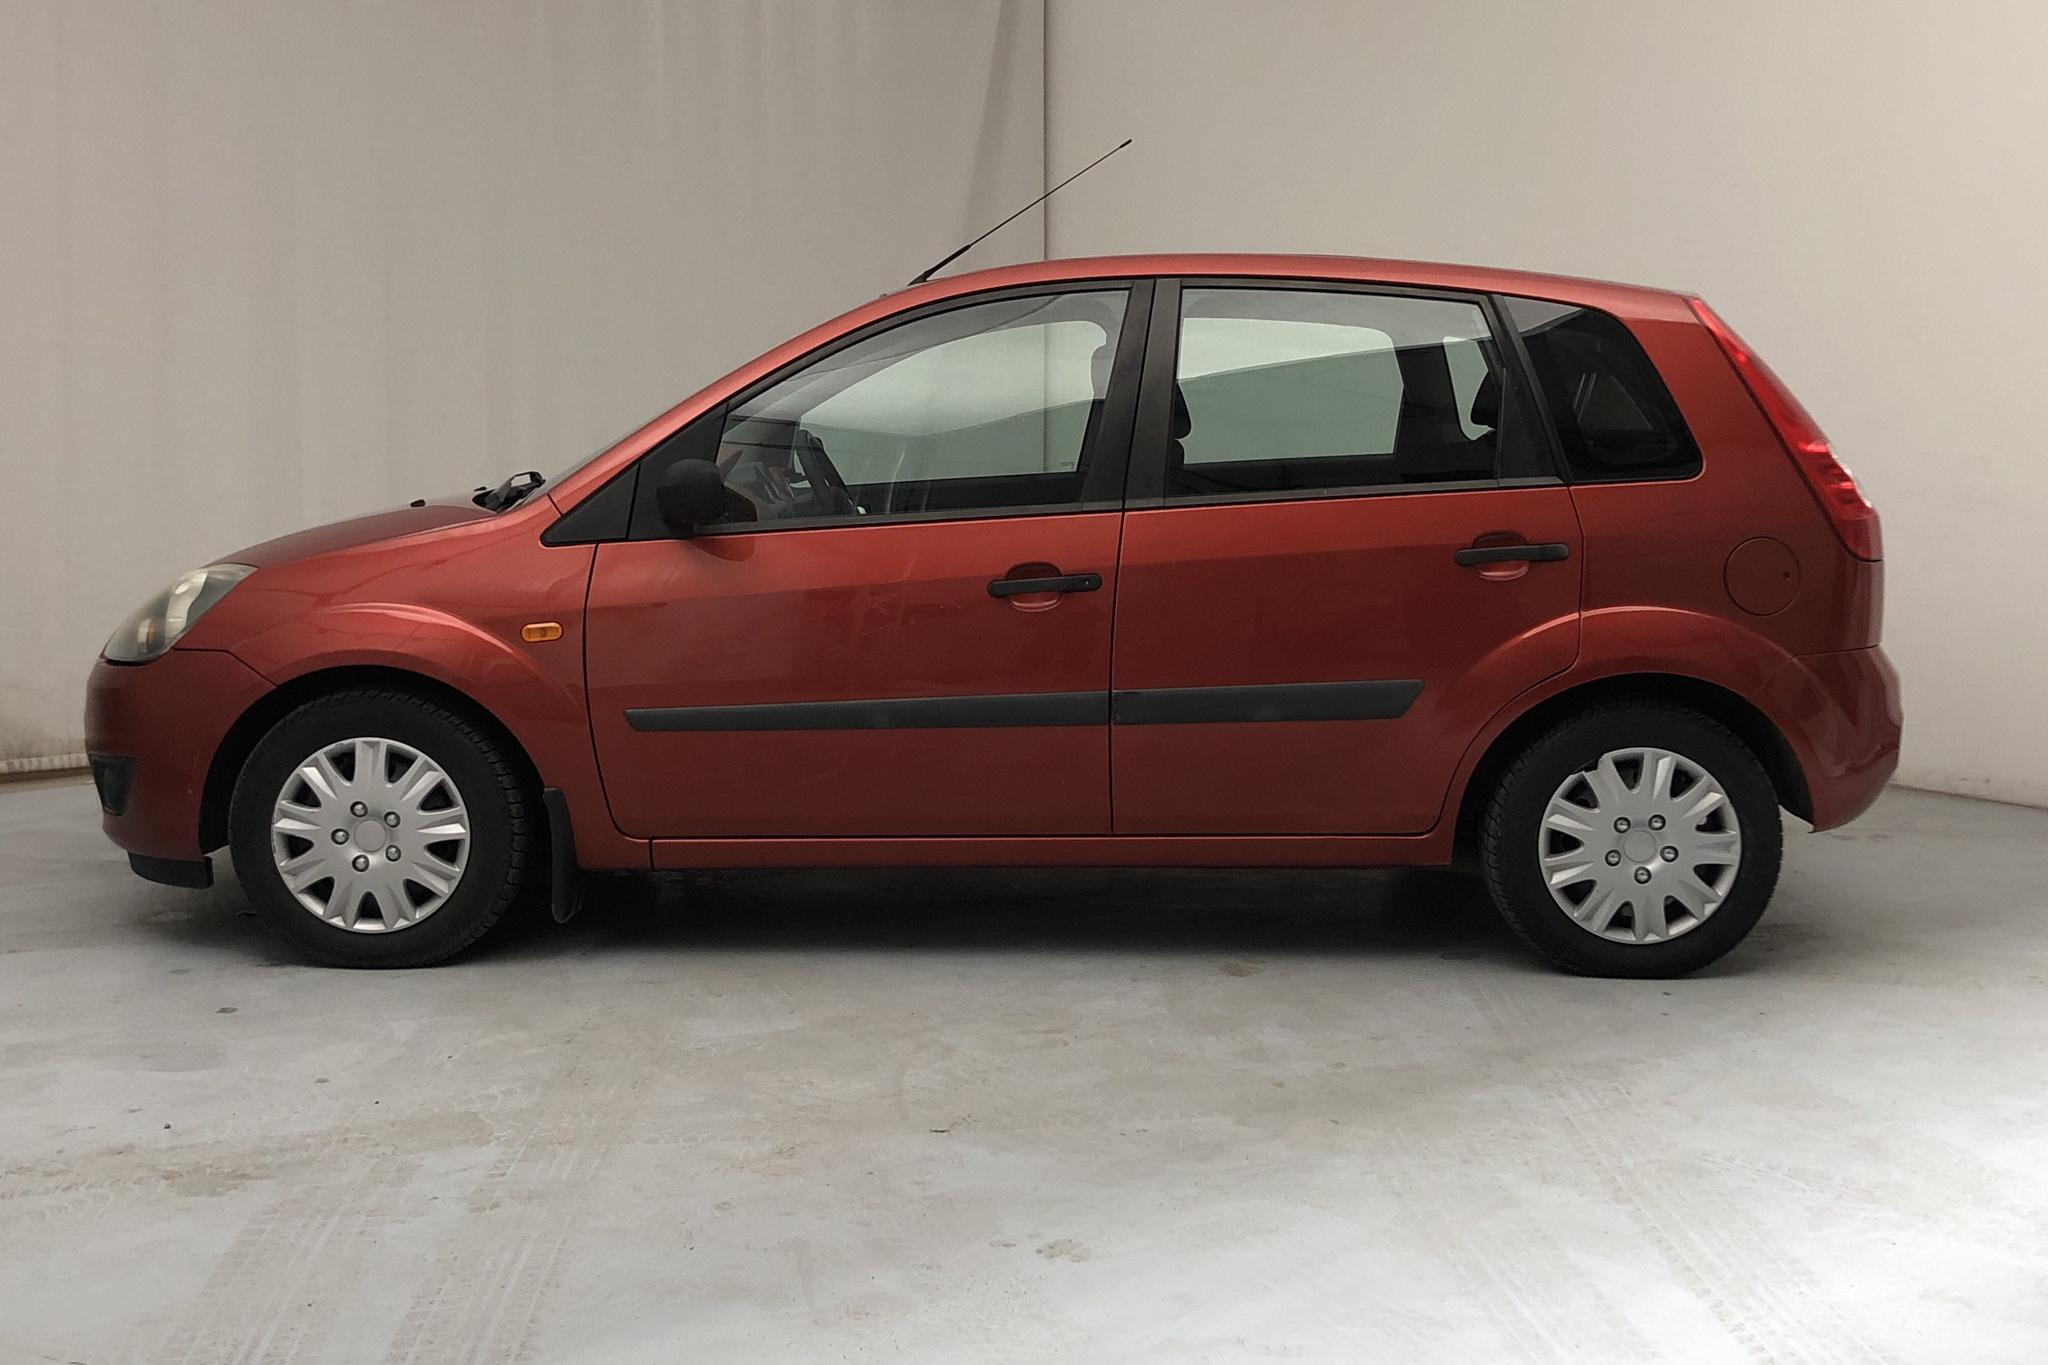 Ford Fiesta 1.4 5dr (80hk) - 130 000 km - Manual - red - 2006